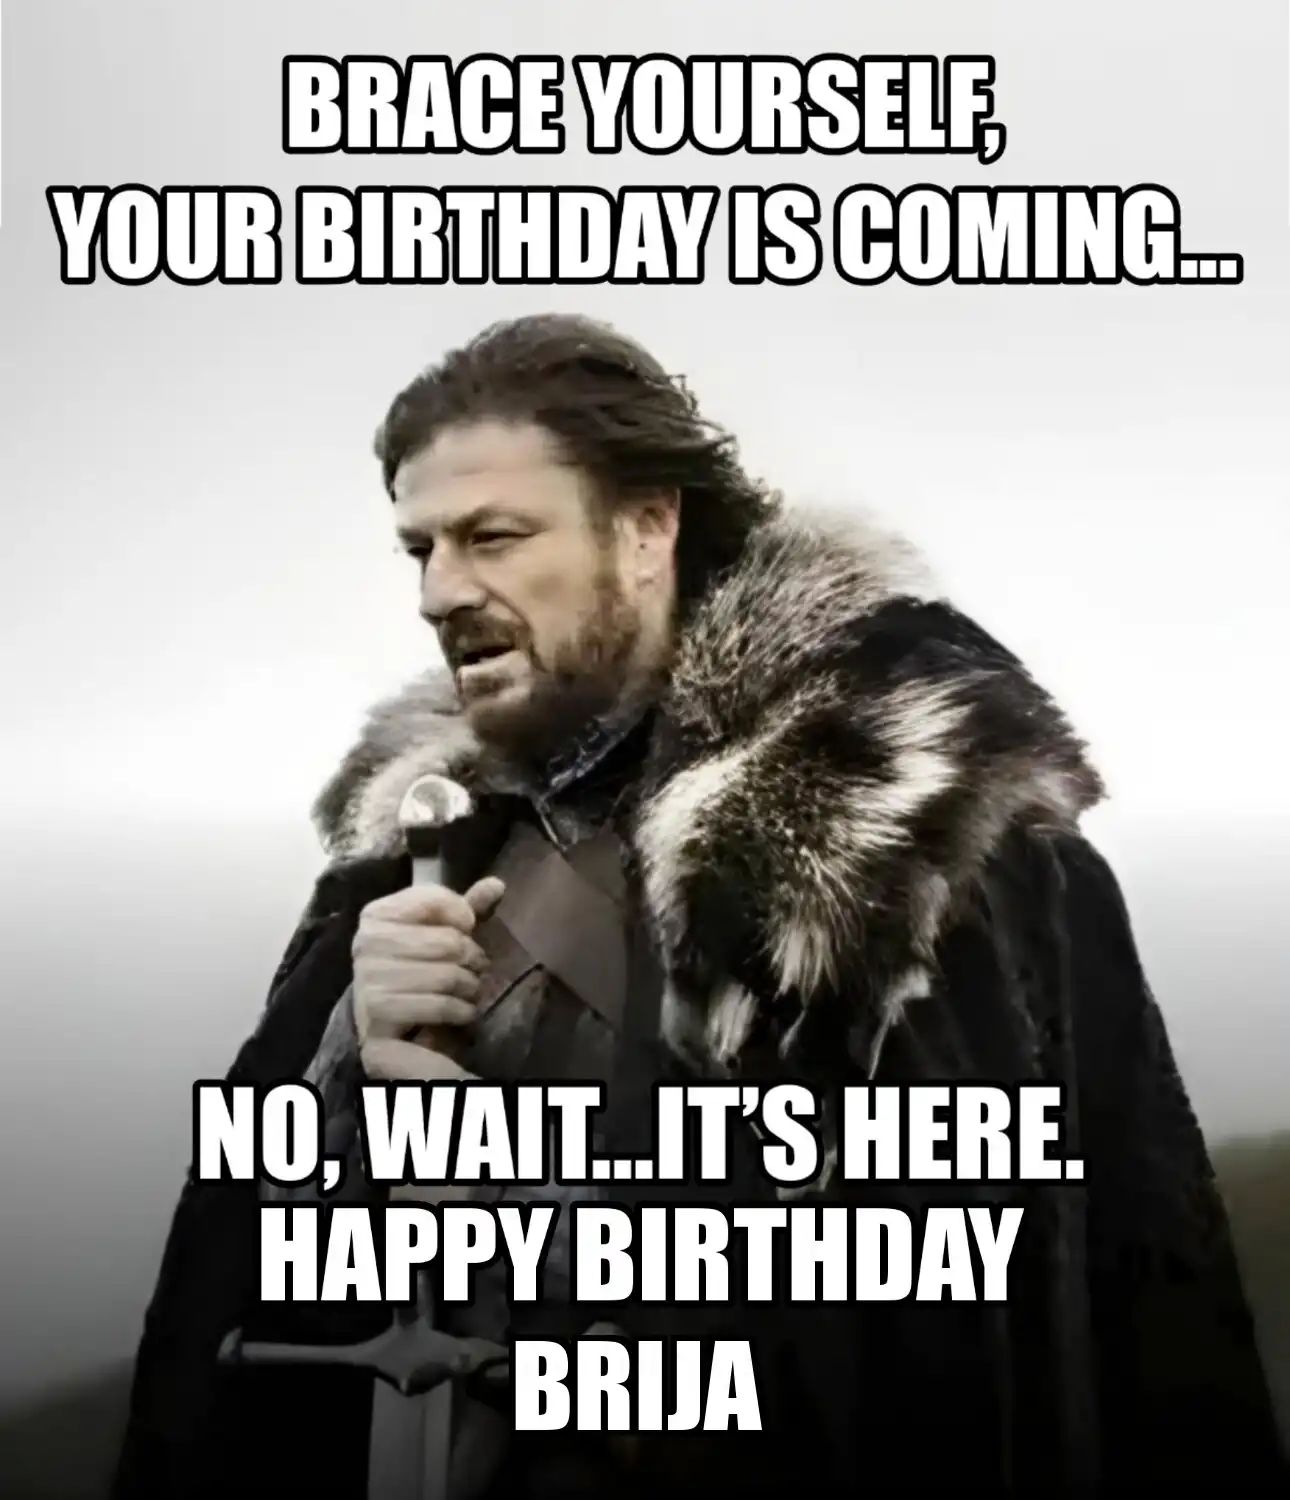 Happy Birthday Brija Brace Yourself Your Birthday Is Coming Meme